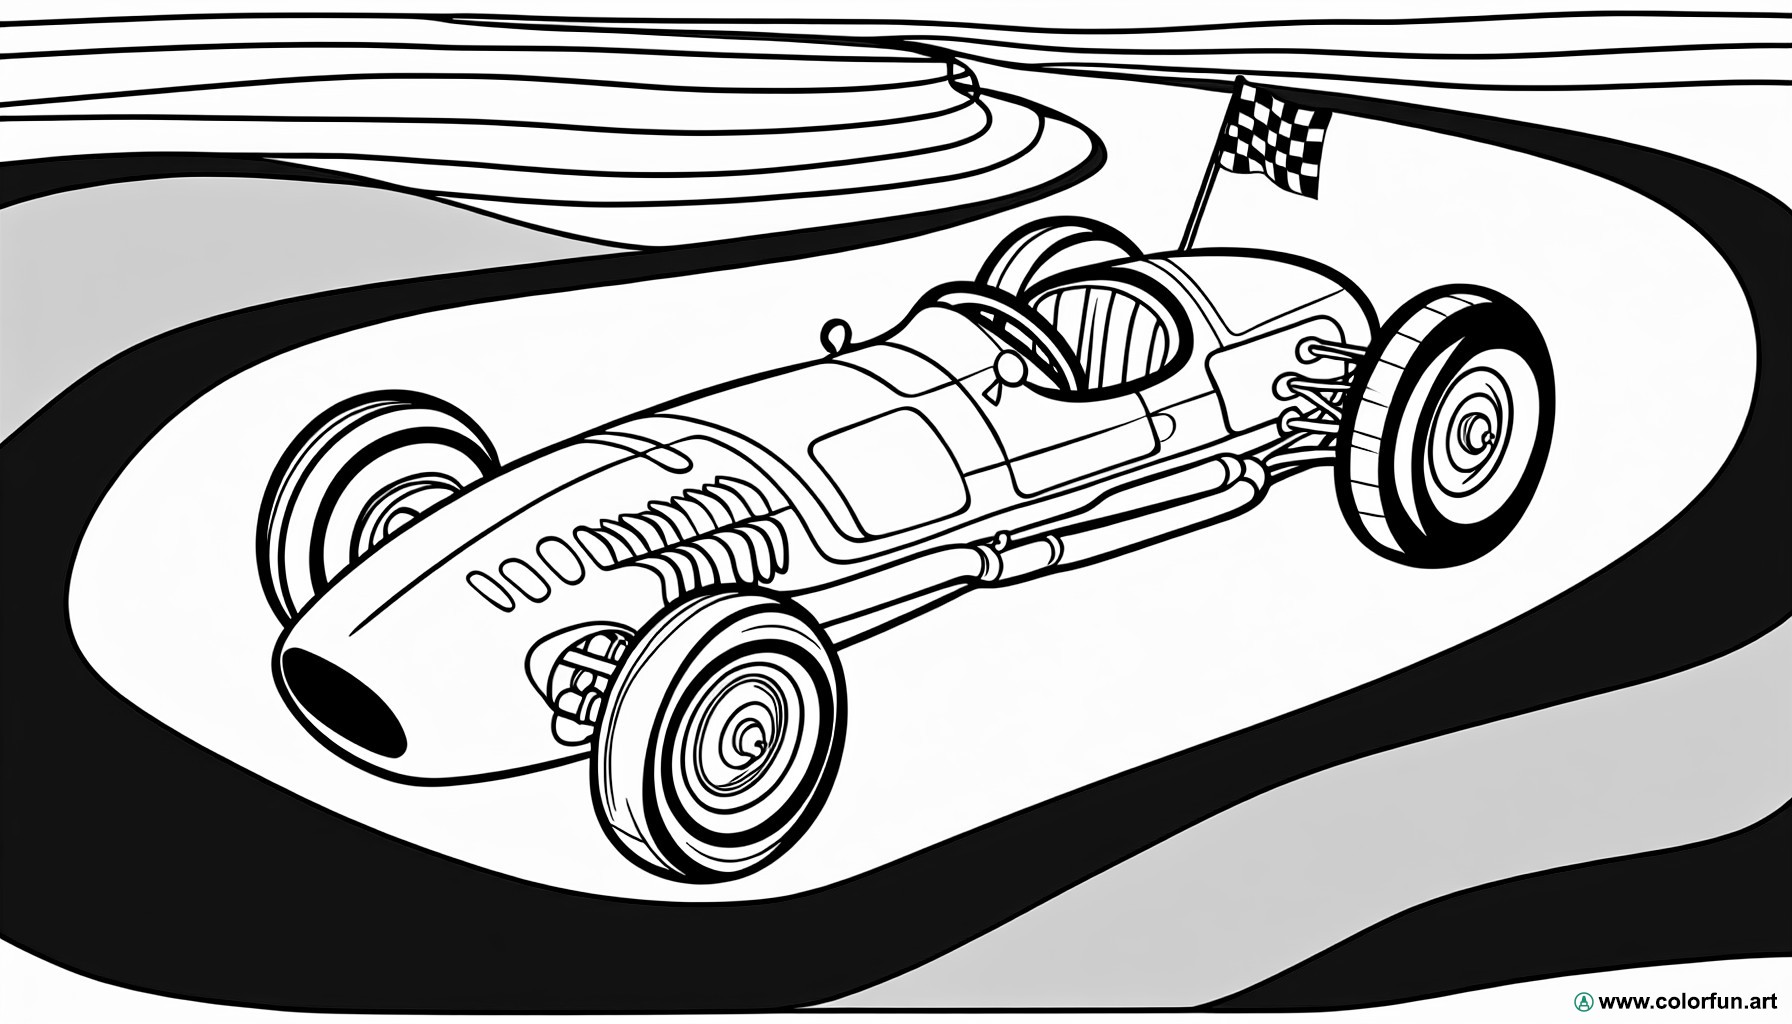 Vintage racing car coloring page